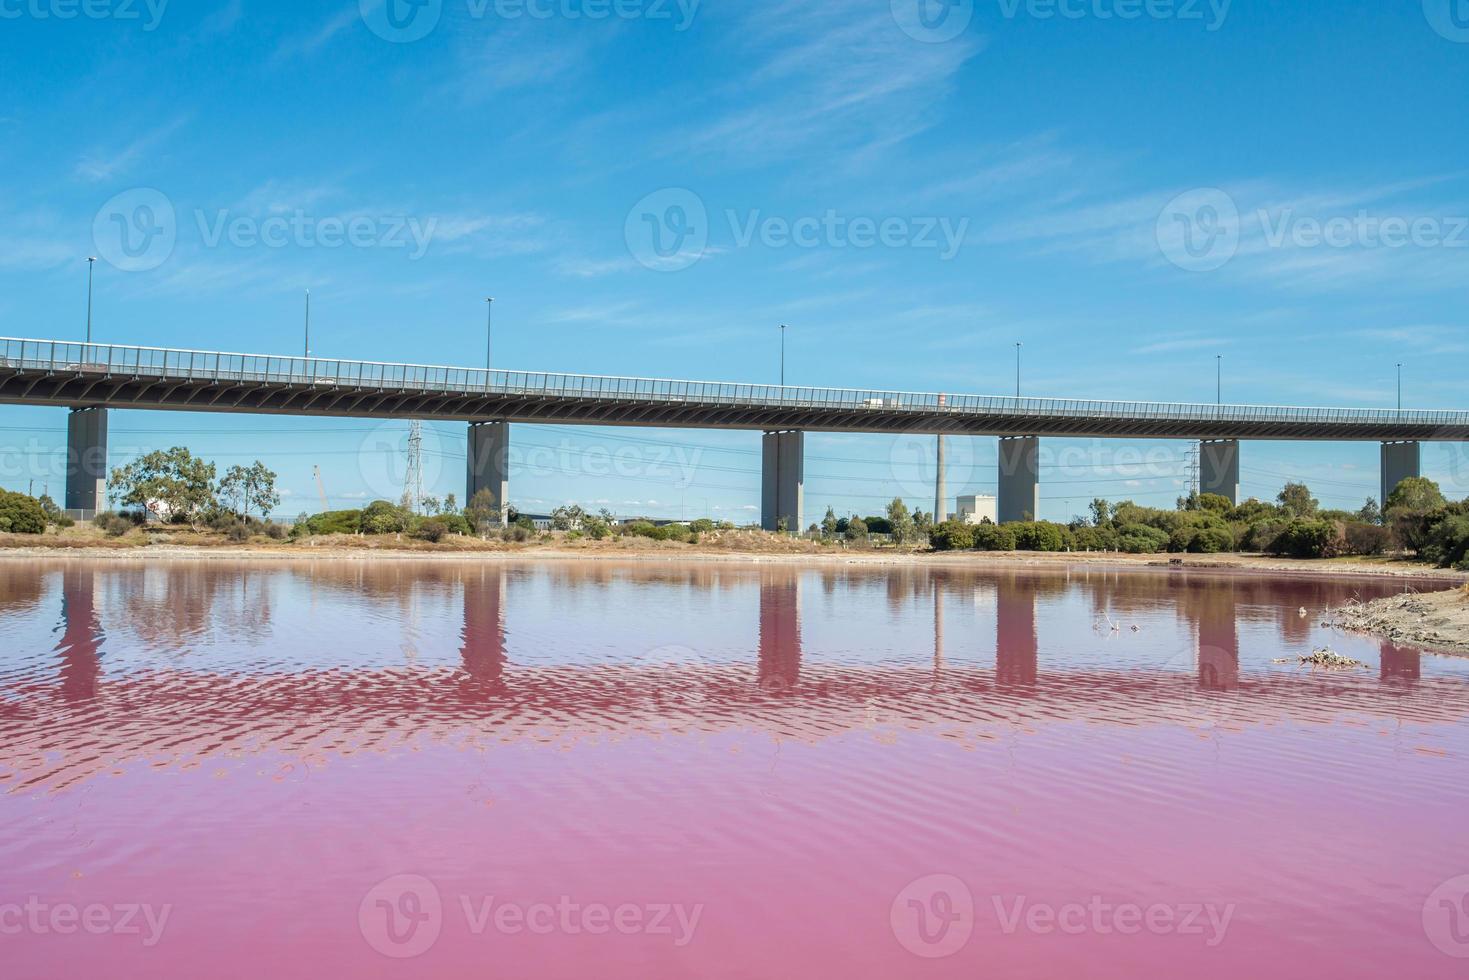 landskapet utsikt över den rosa sjön vid west gate park, melbourne, victoria state of Australia. foto